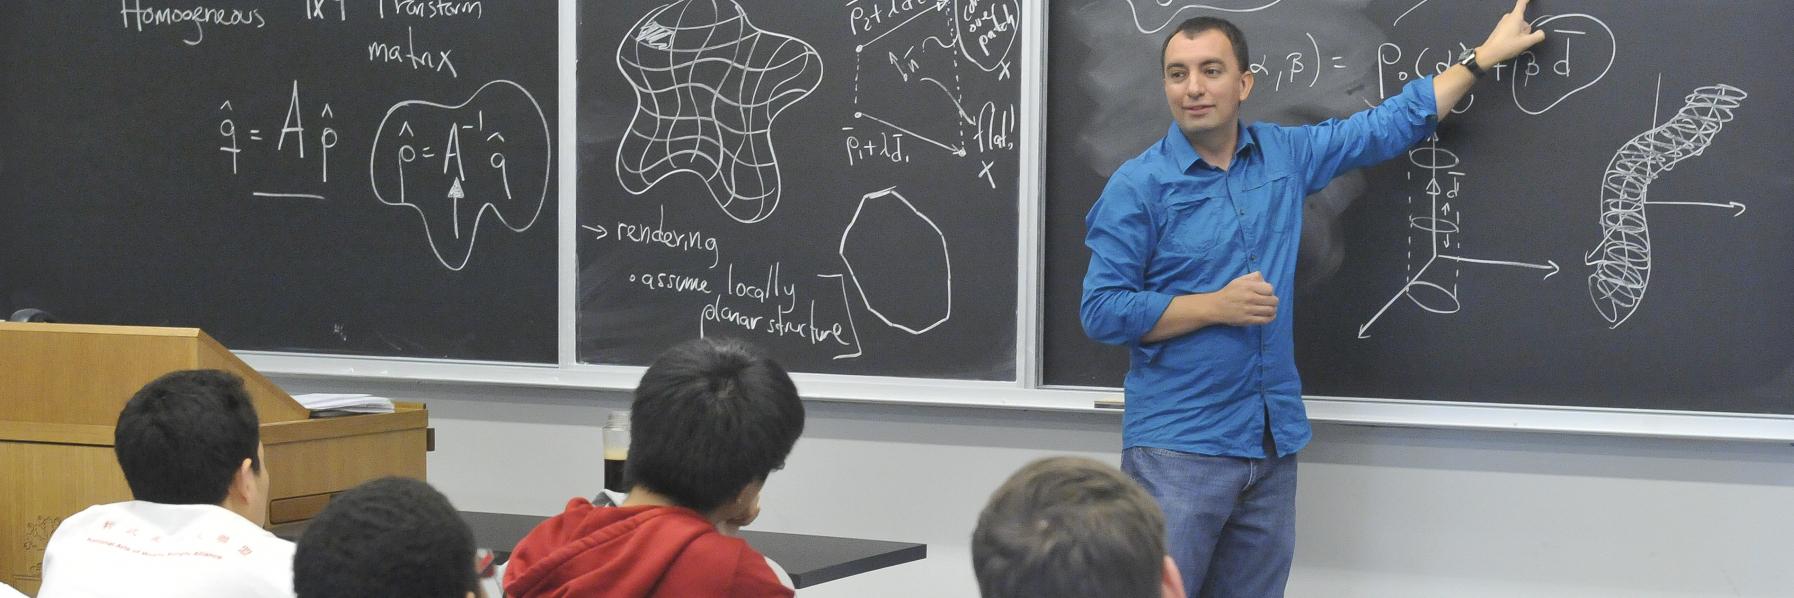 Professor teaching at chalkboard